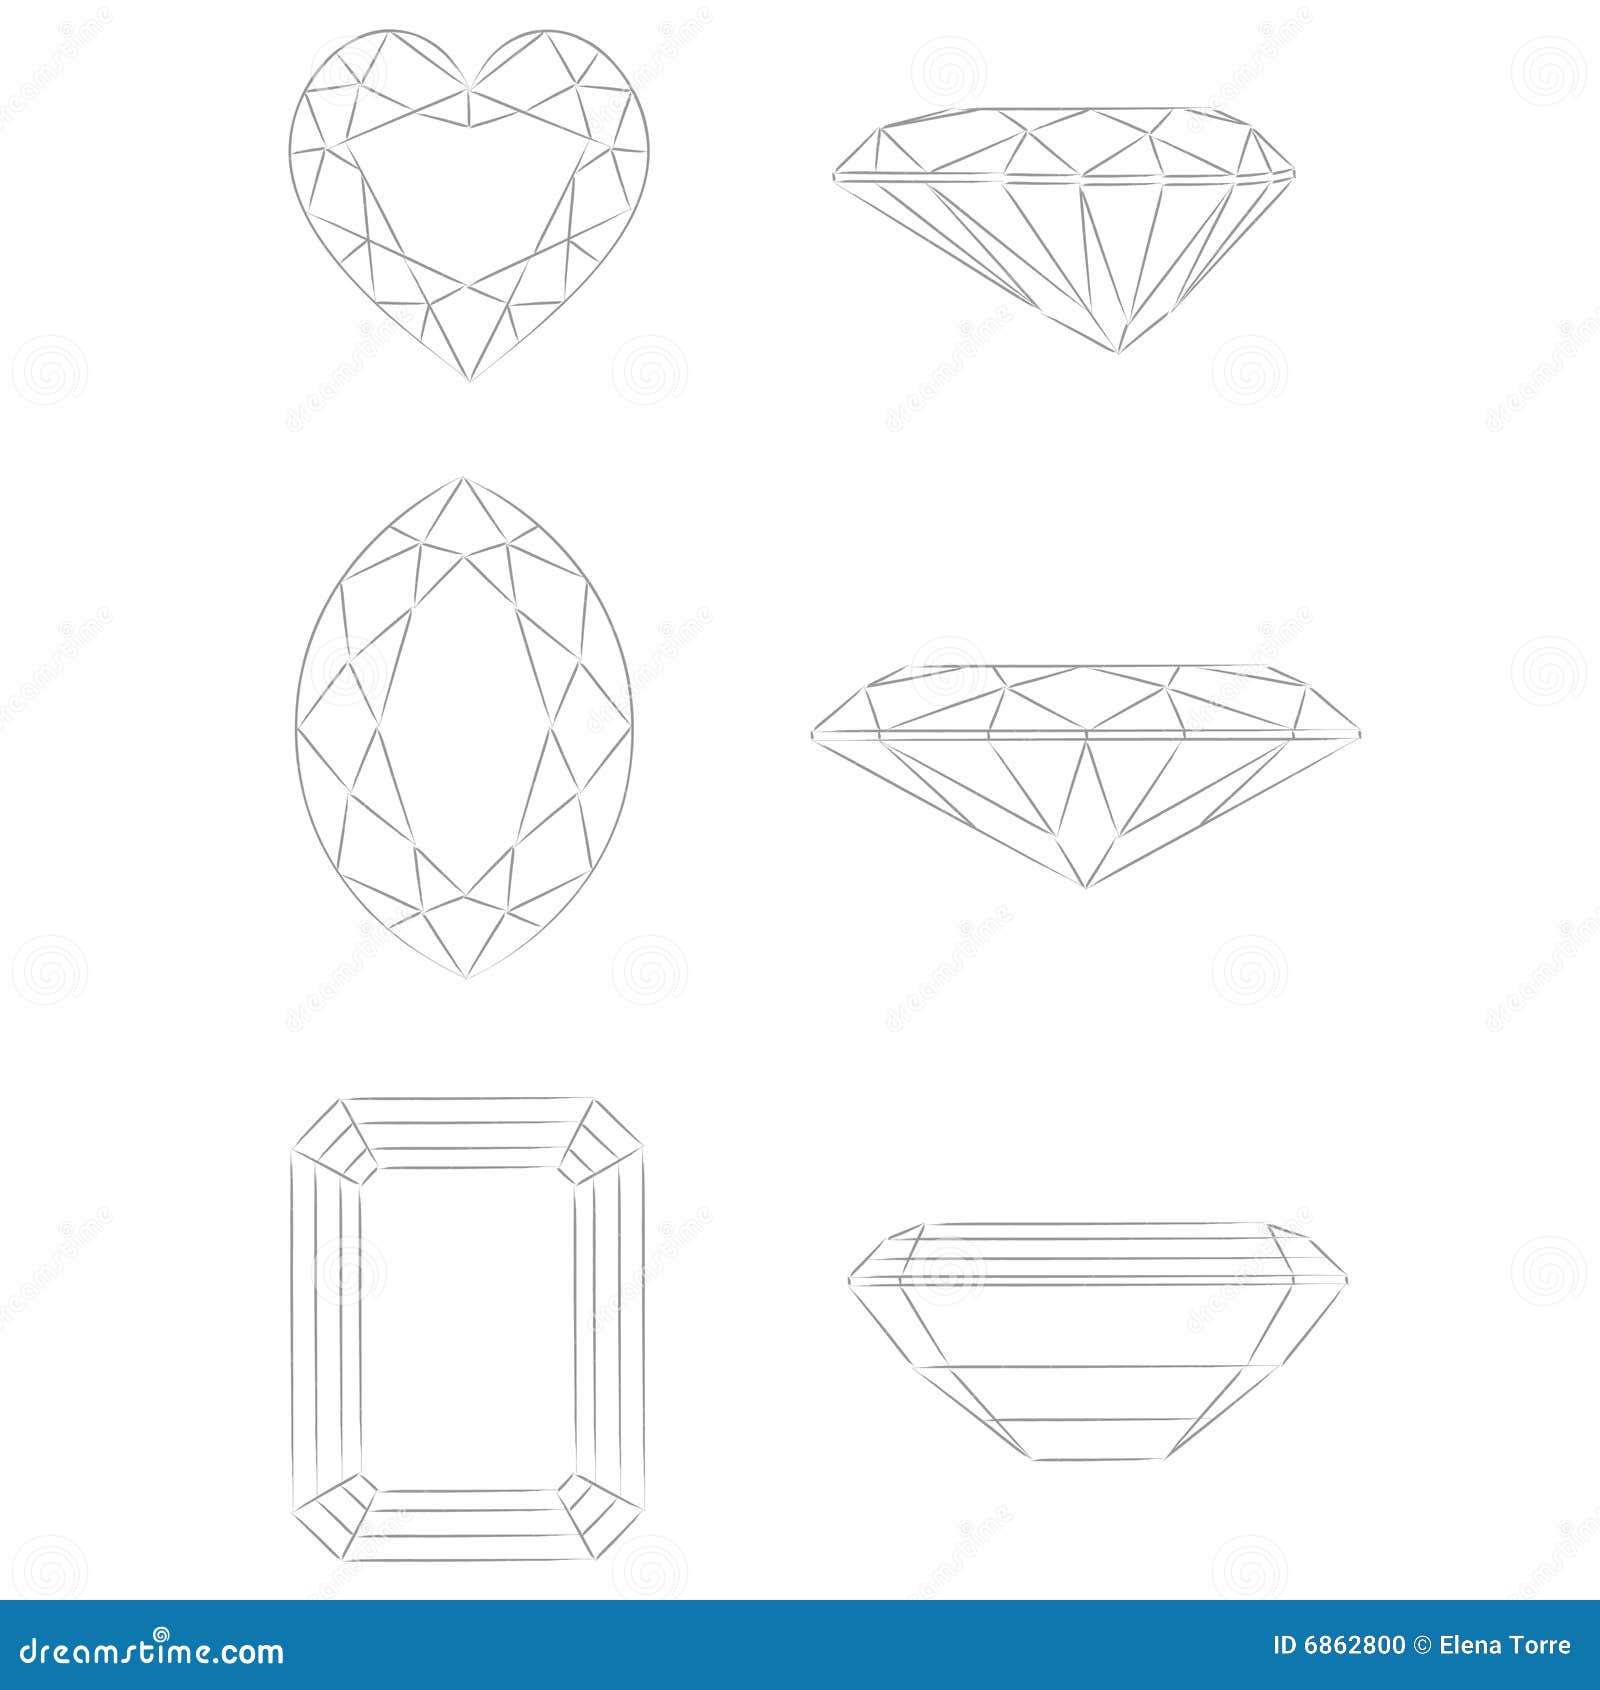 diamond s : heart - marquise - emerald